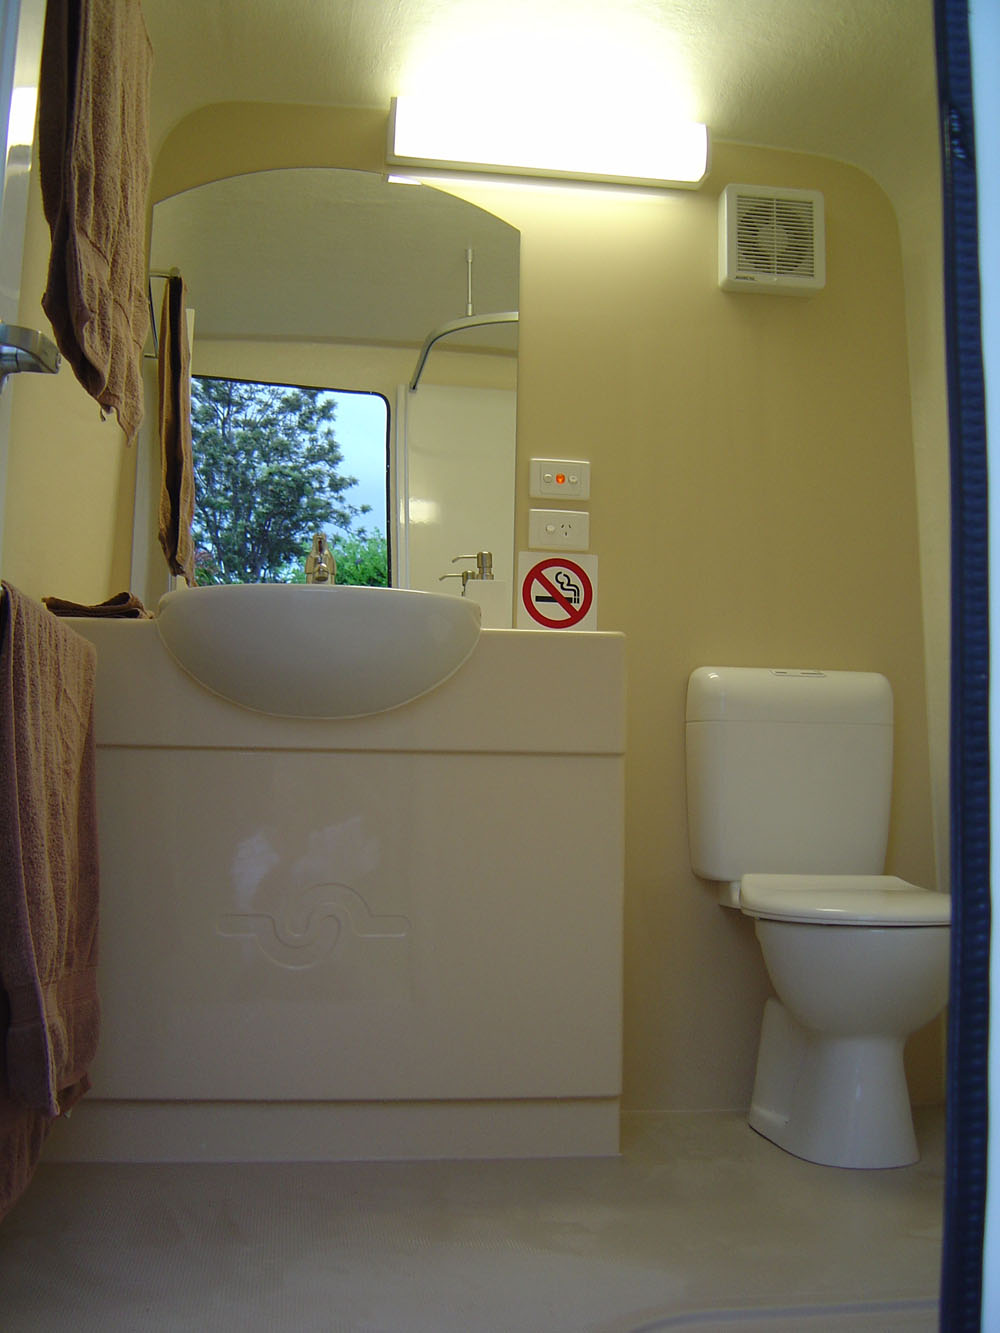 Portable Bathrooms and mobile bathroom solutionsSydney bathroom hire